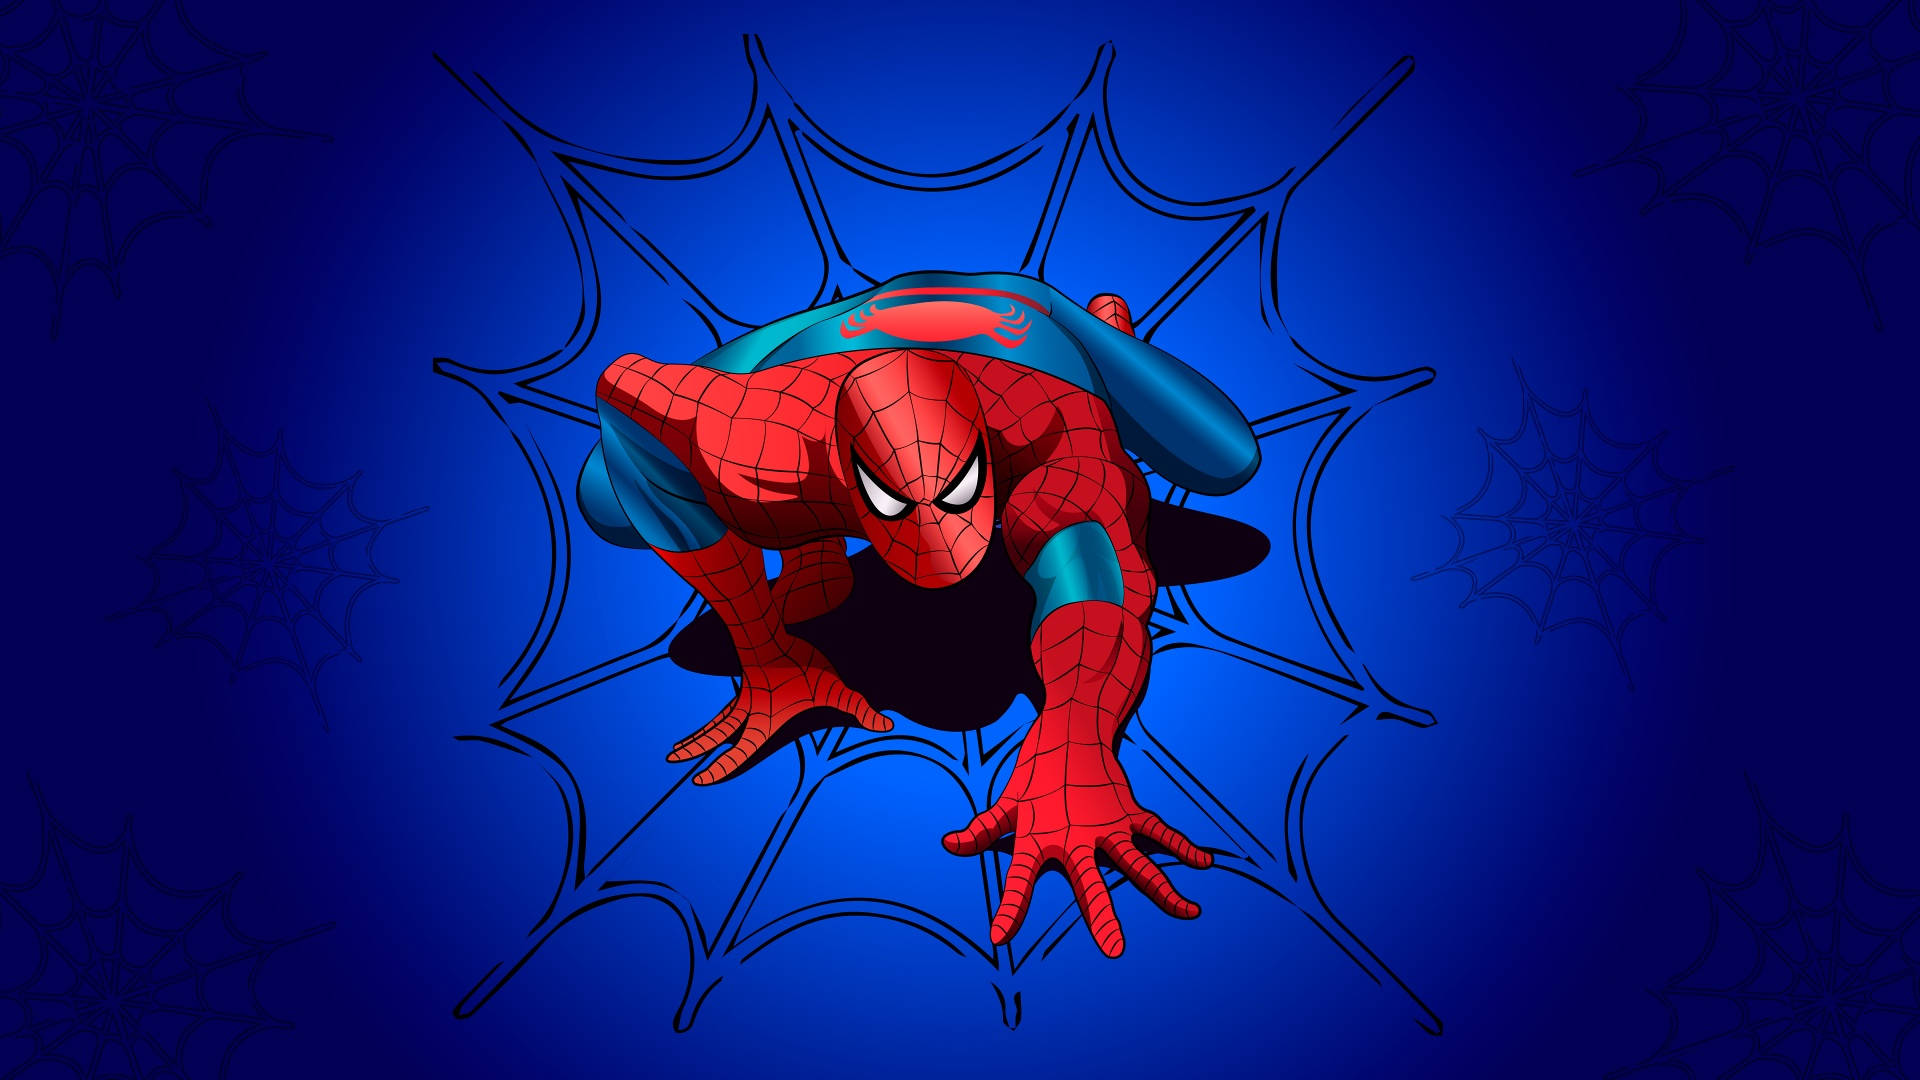 MacOS Mojave Spider-Man Wallpaper